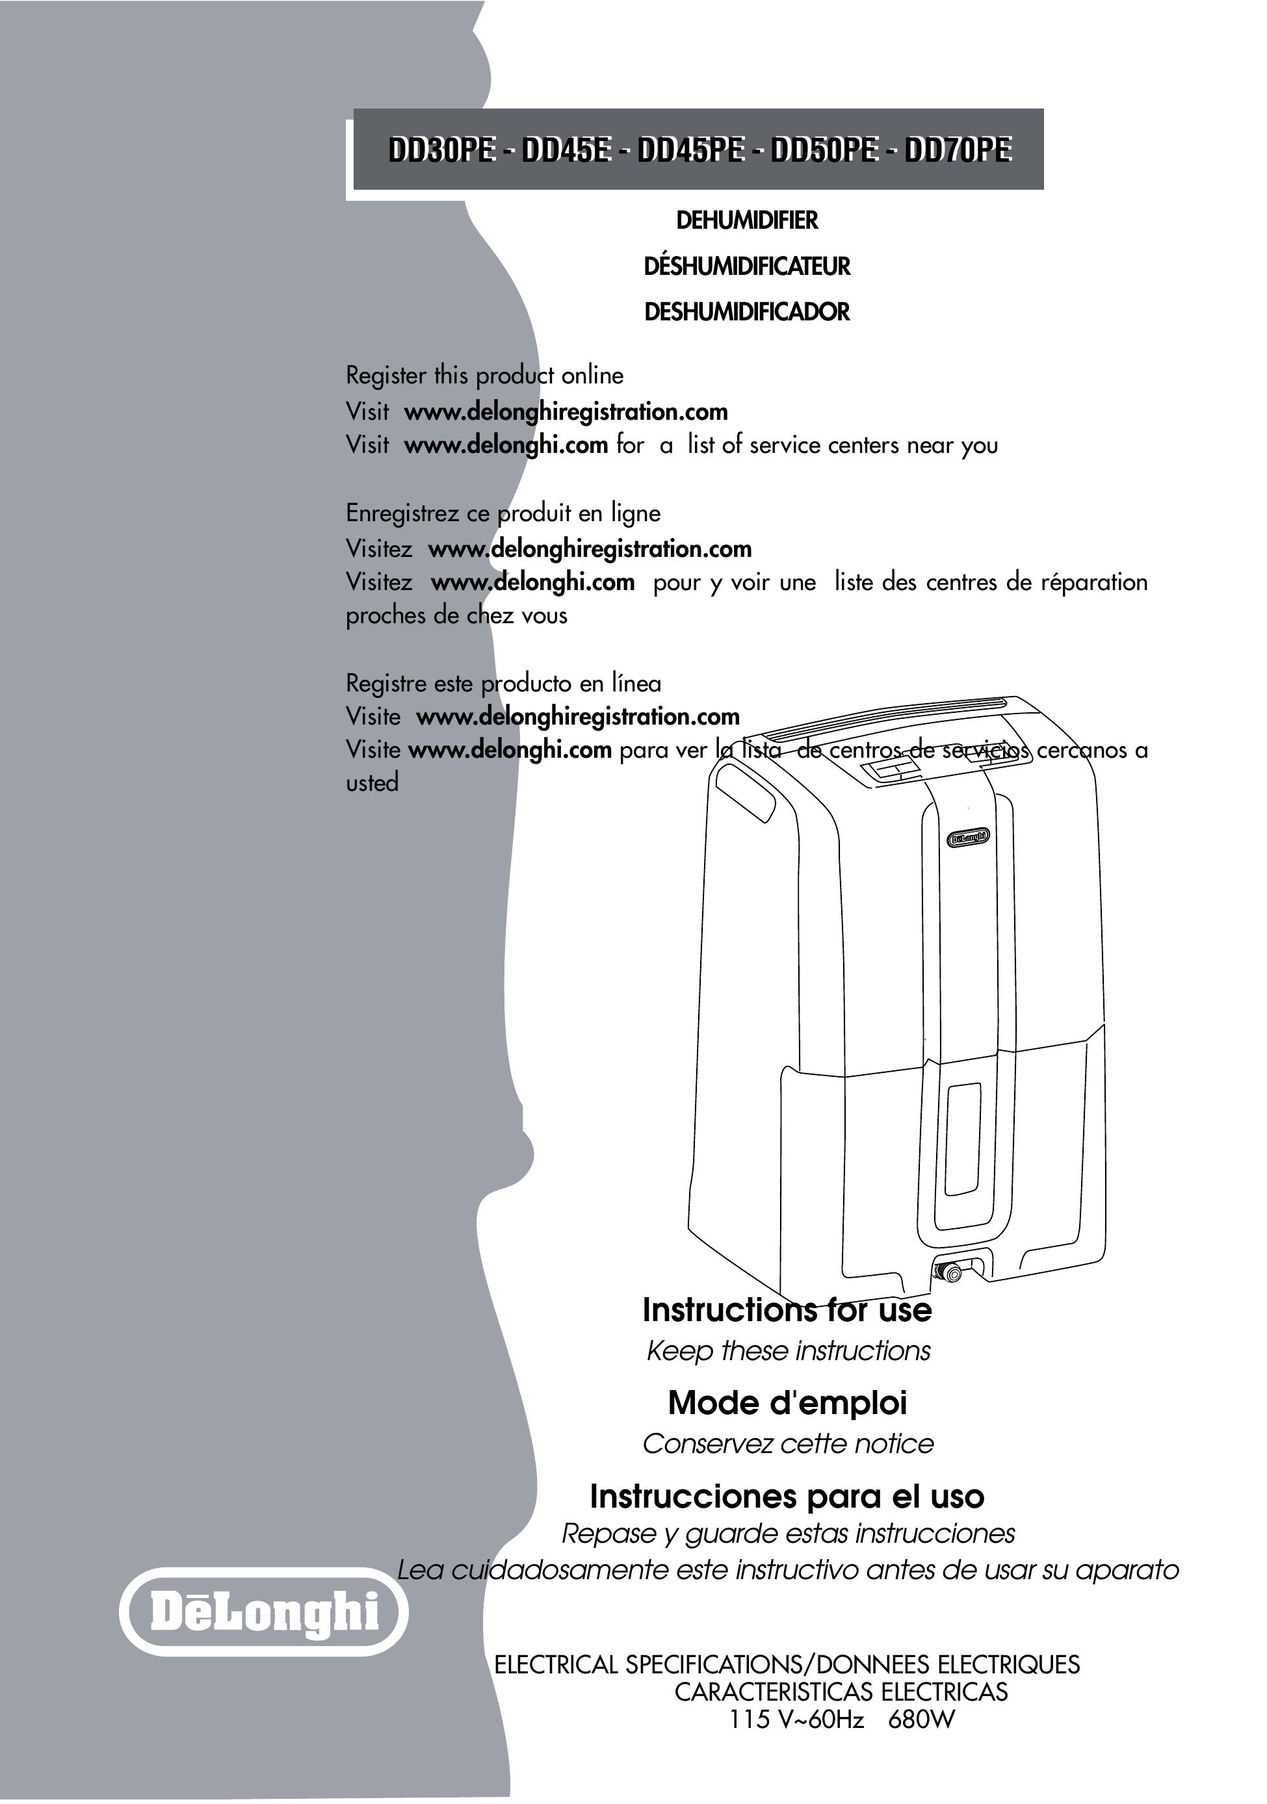 DeLonghi dehumidifier Dehumidifier User Manual